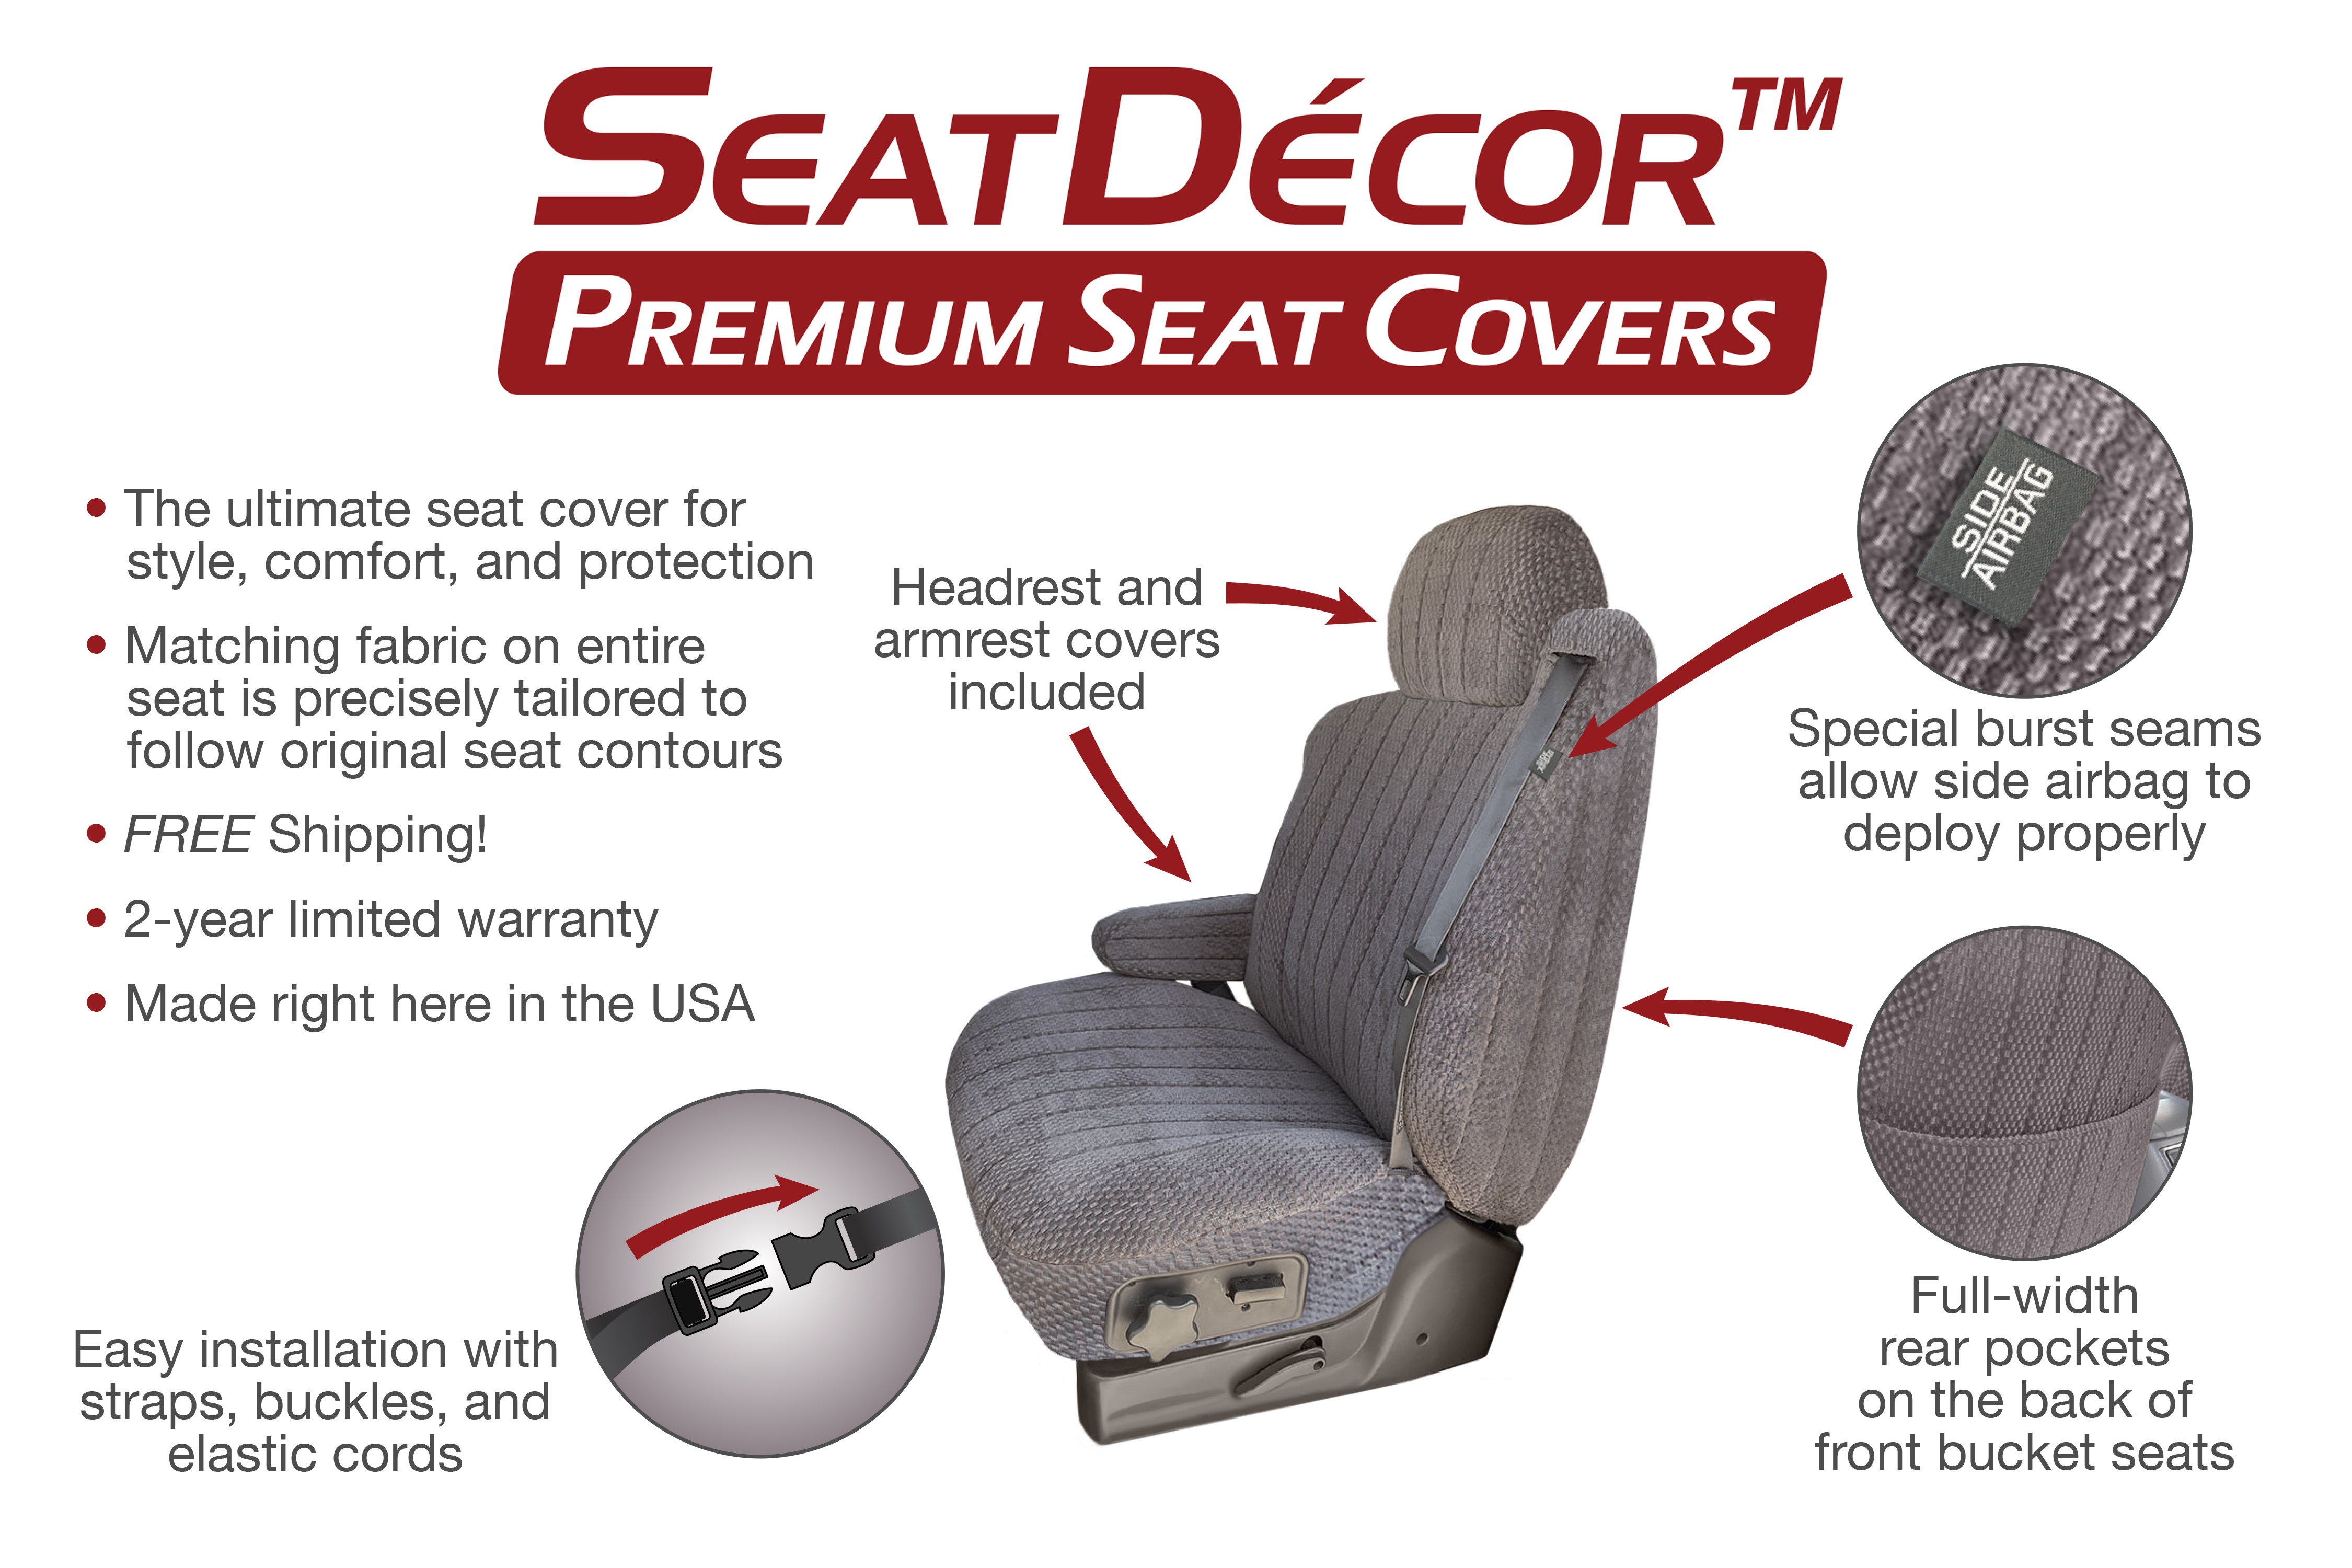 Seat Decor Info Graphic